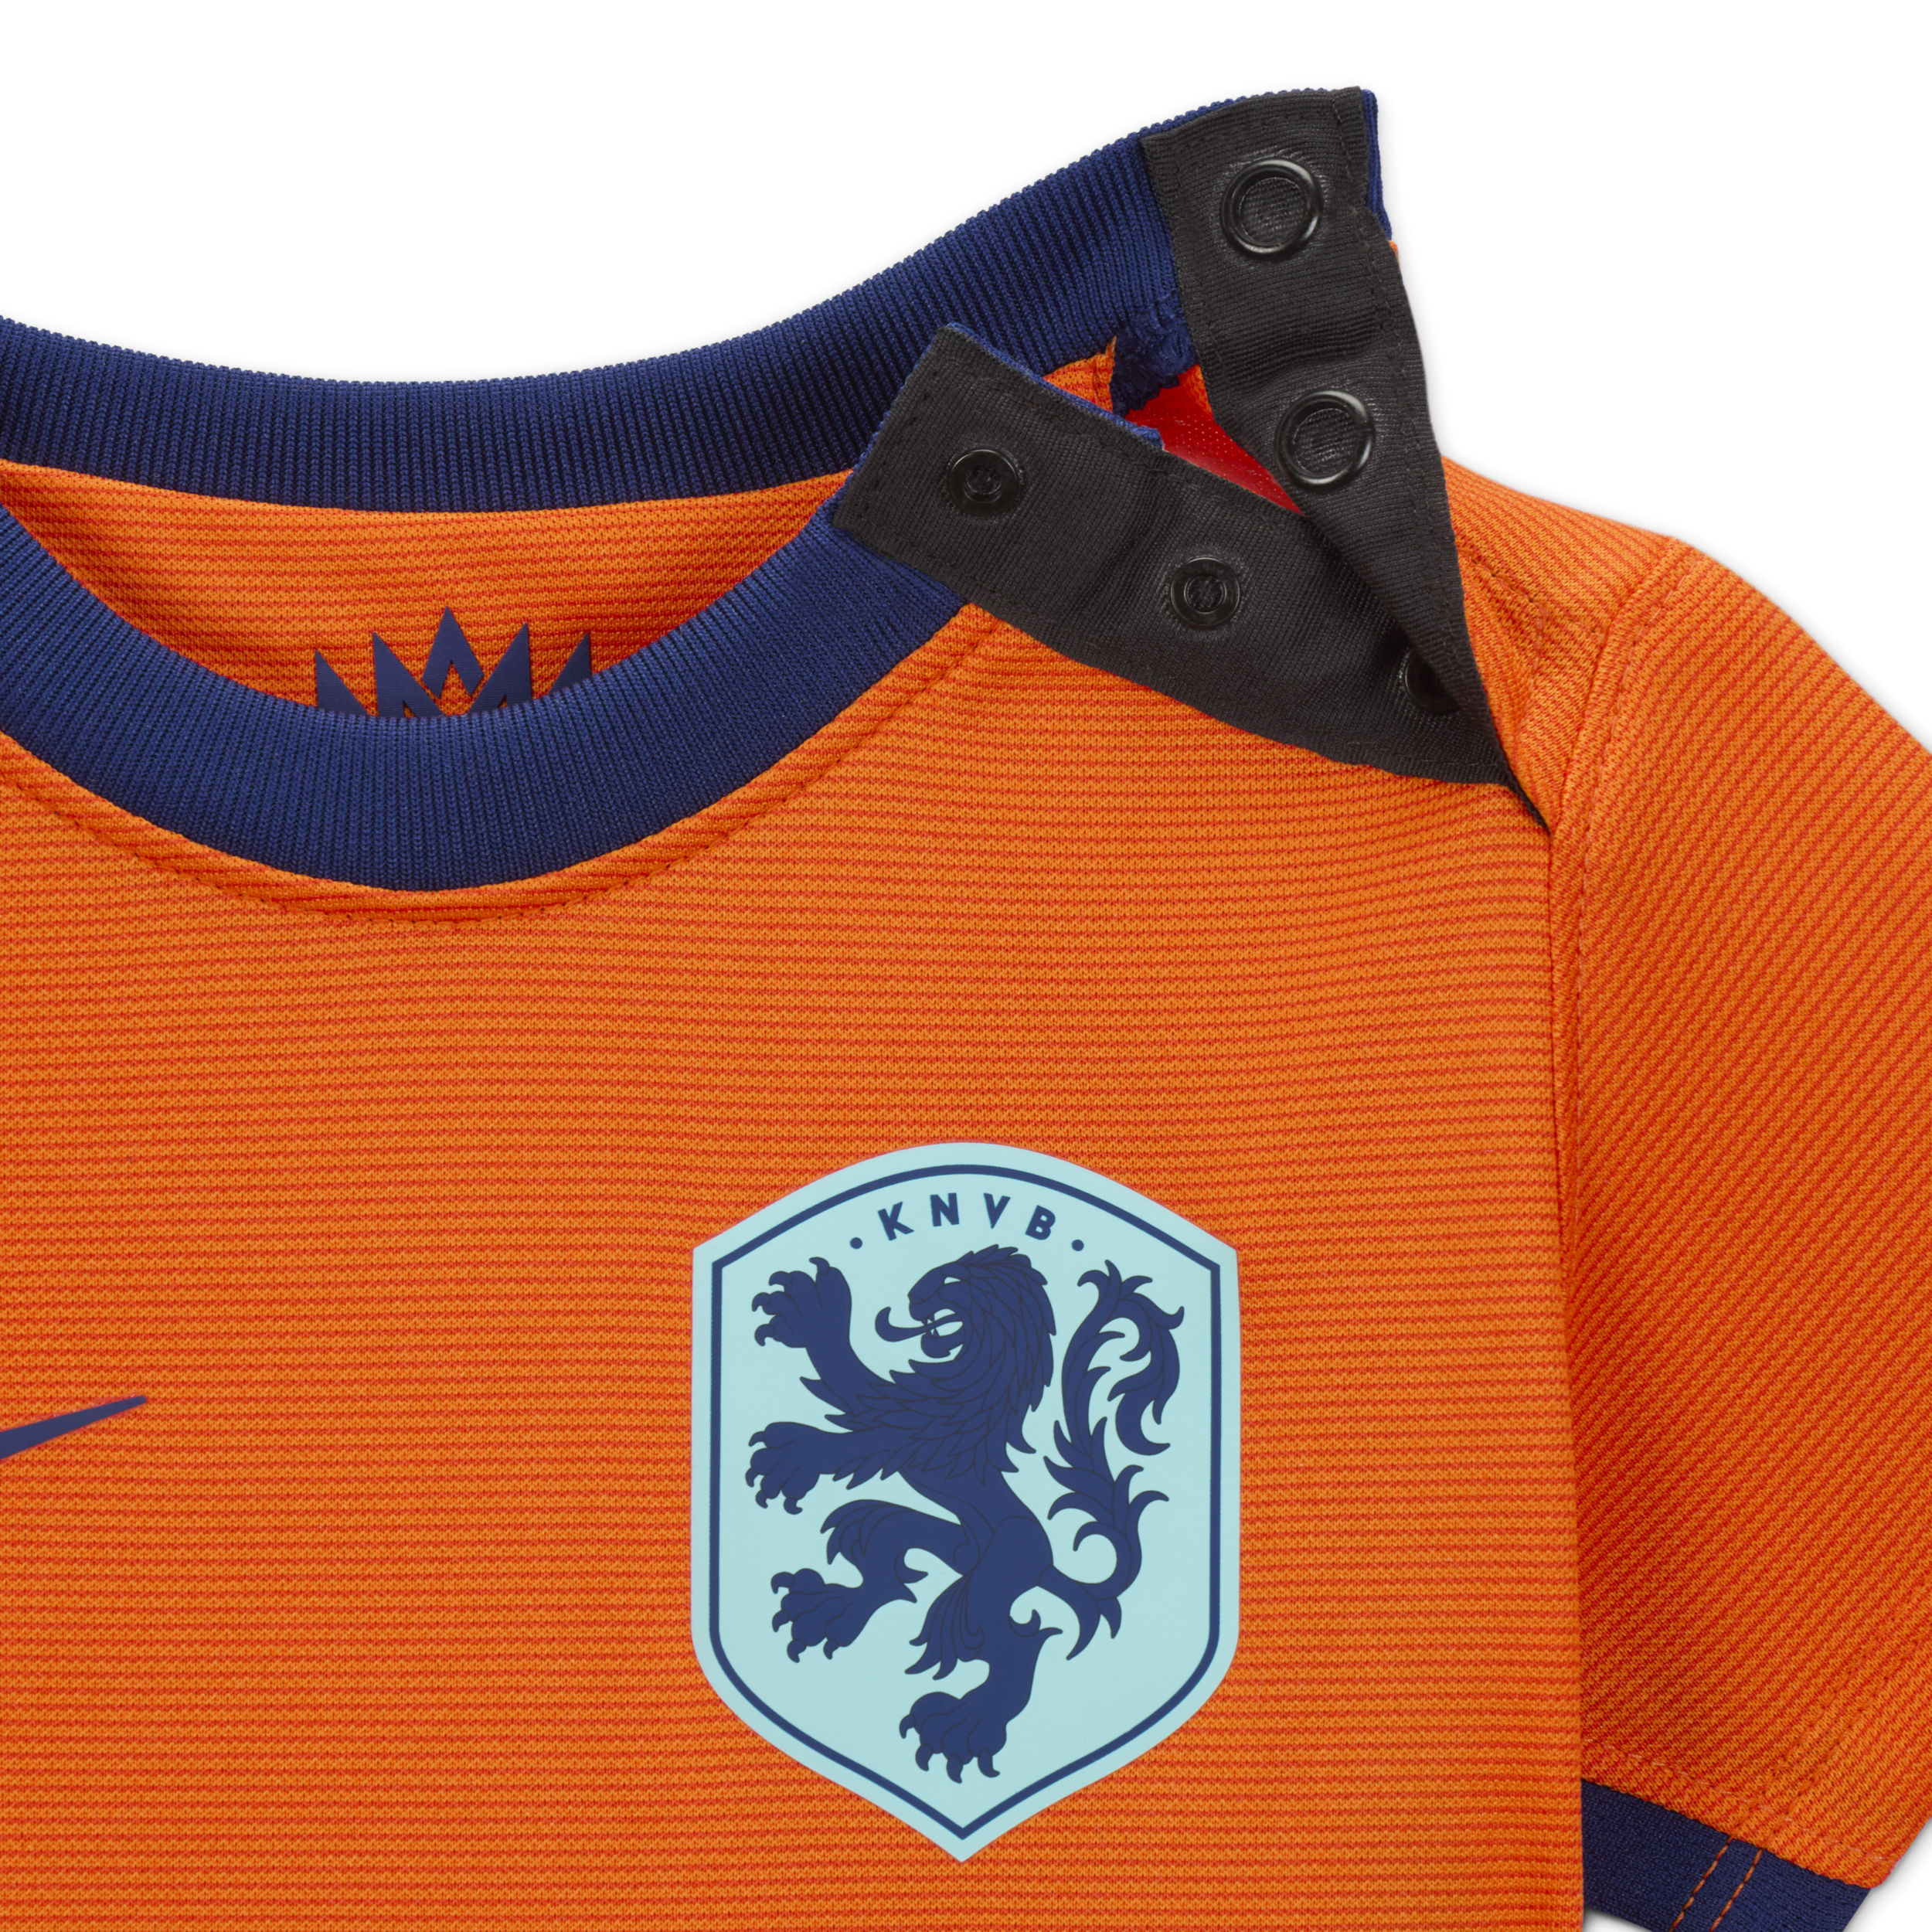 Nike Nederland 2024 Stadium Thuis driedelig replica voetbaltenue voor baby's peuters Oranje